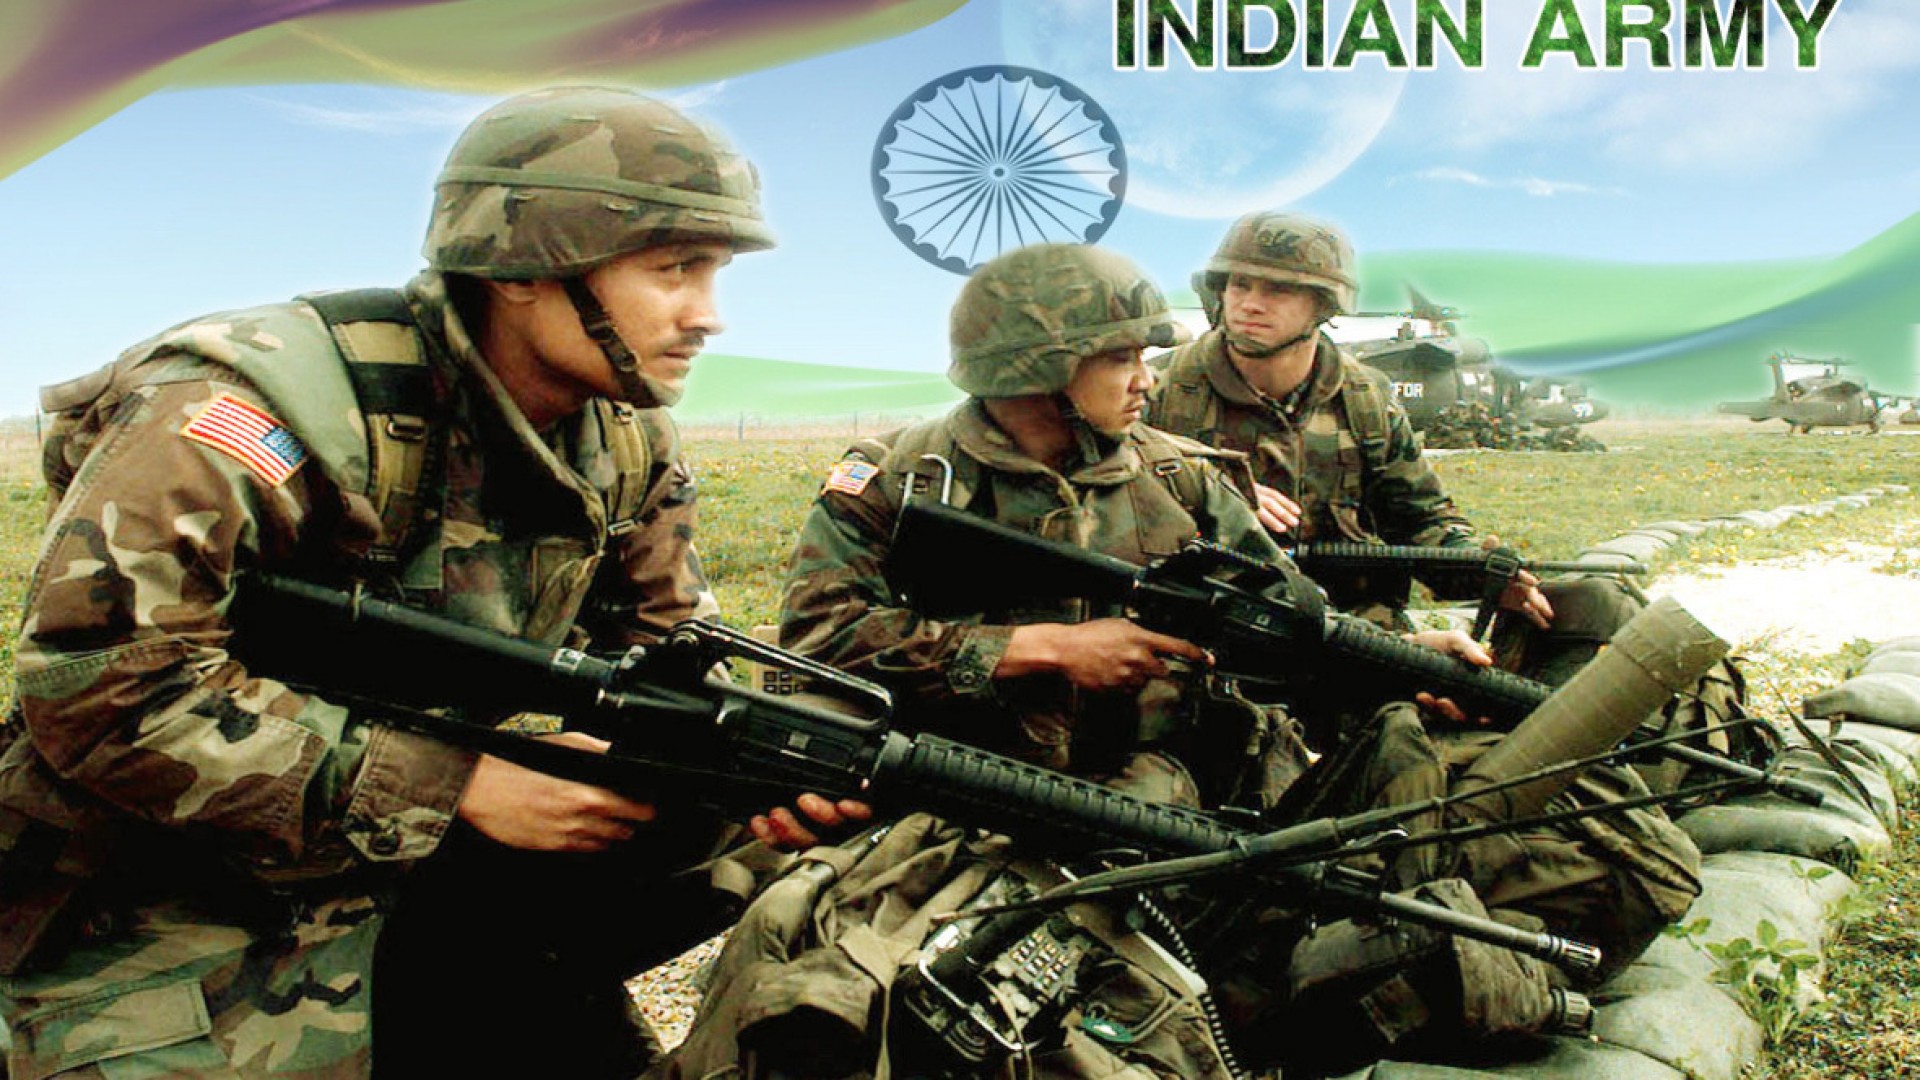 Indian army desktop hd wallpaper - HDWallpapersin.com HD